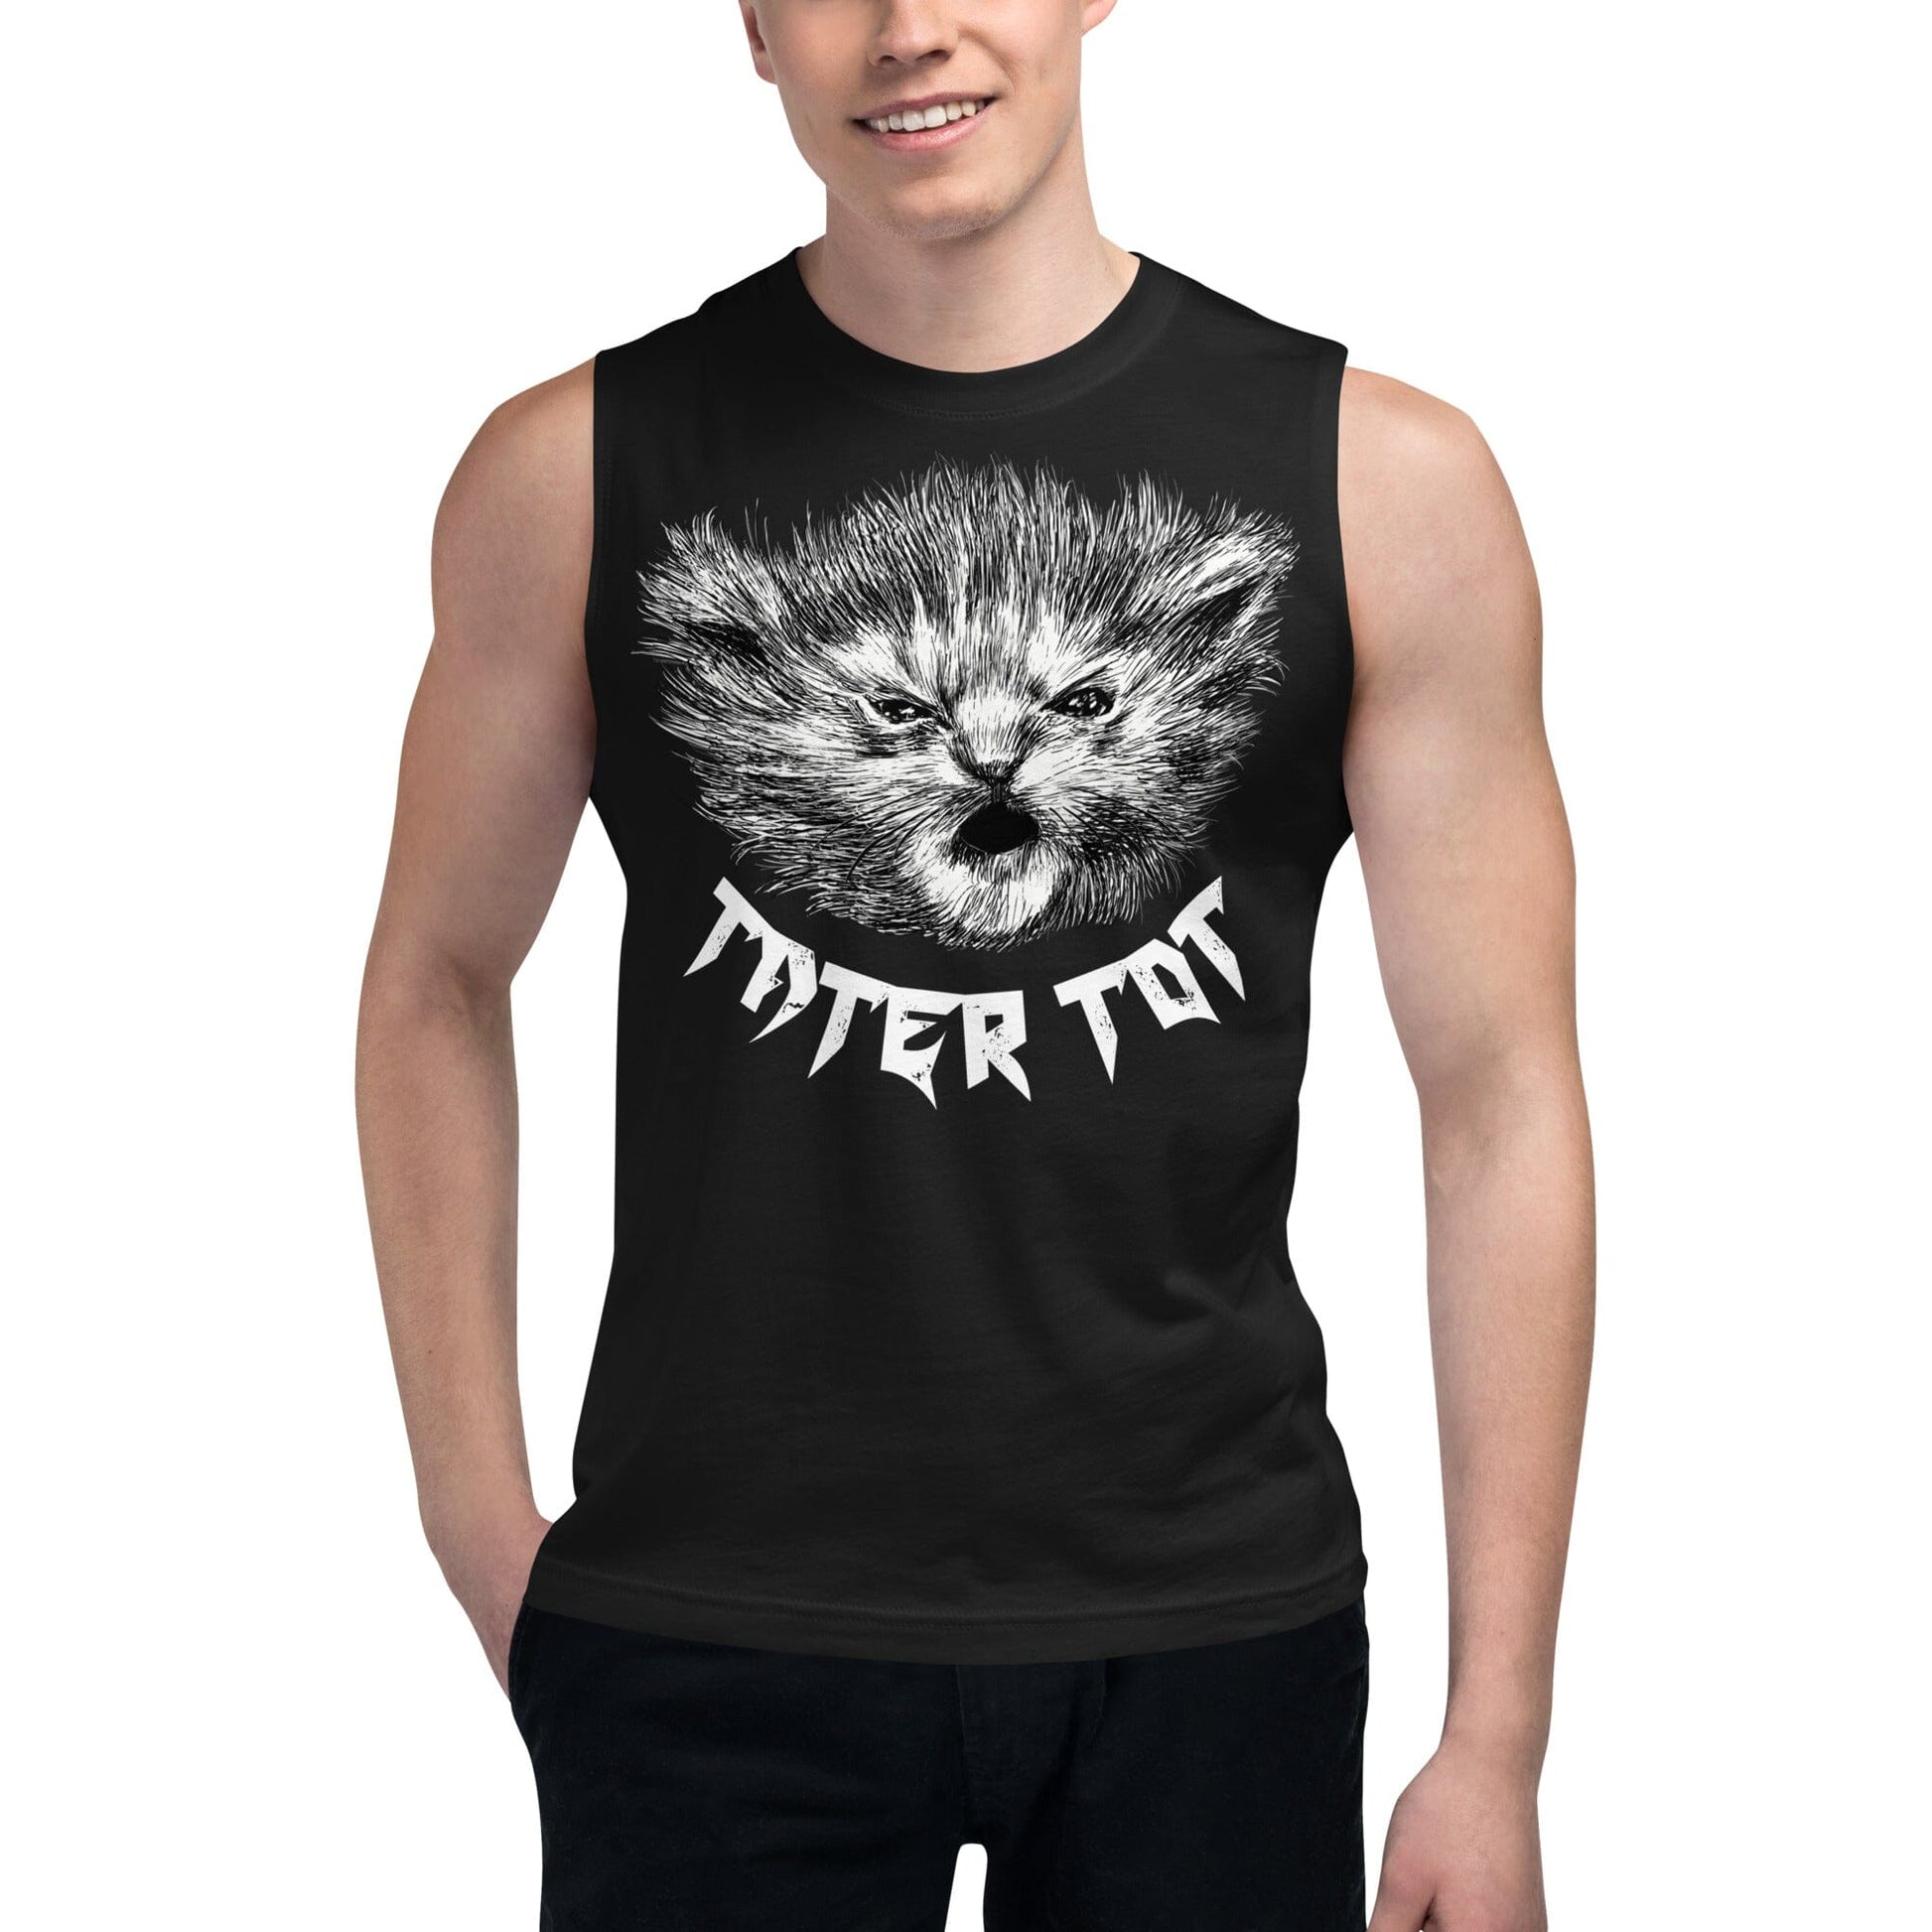 BLACK Metal Tater Tot Muscle Shirt [Unfoiled] (All net proceeds go to Kitty CrusAIDe) JoyousJoyfulJoyness S 